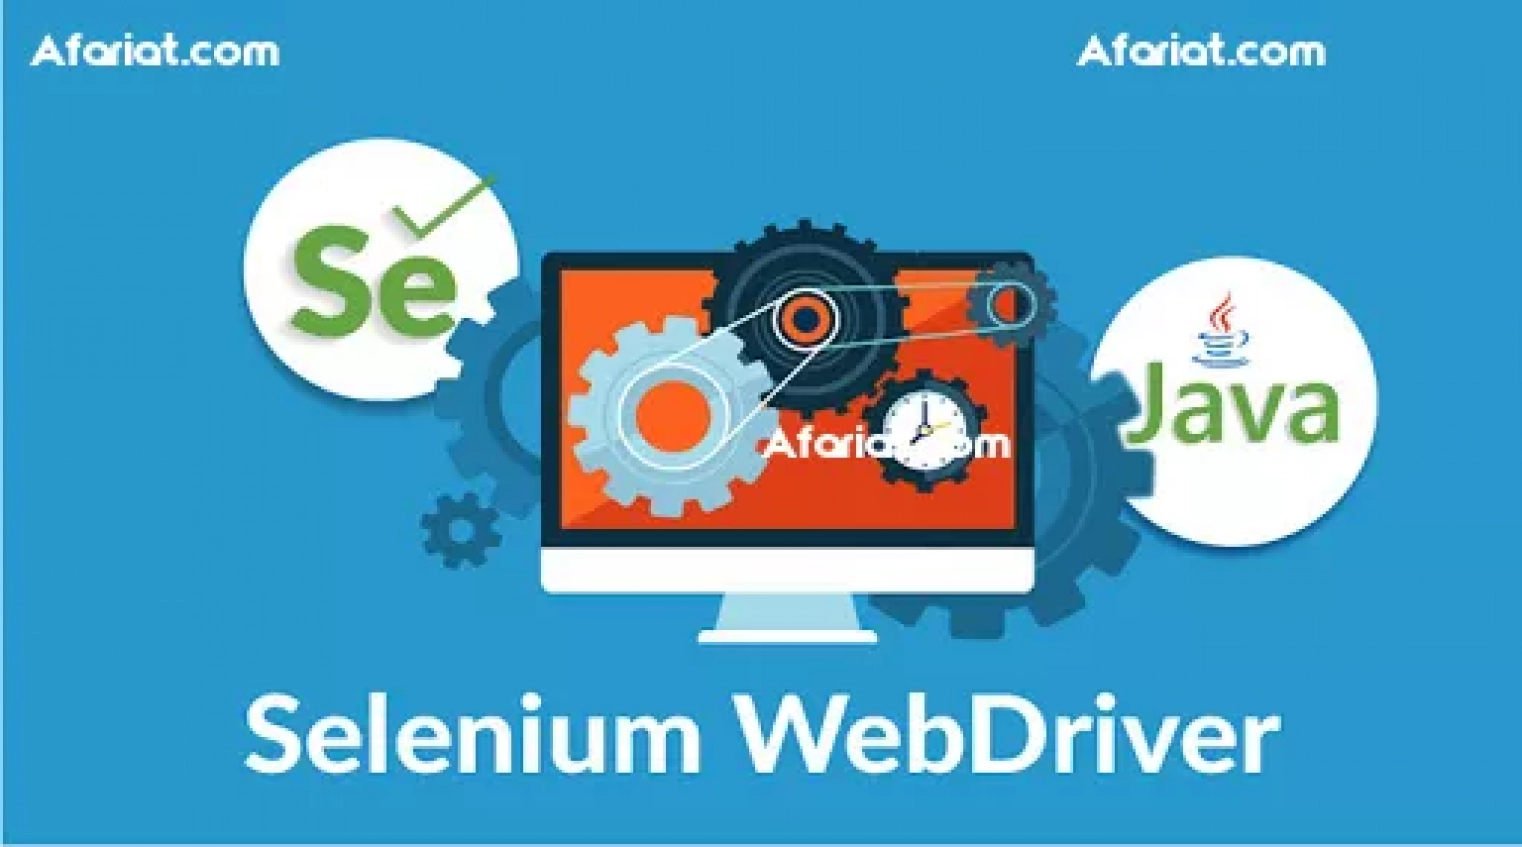 Formation Automatisation Selenium Webdriver